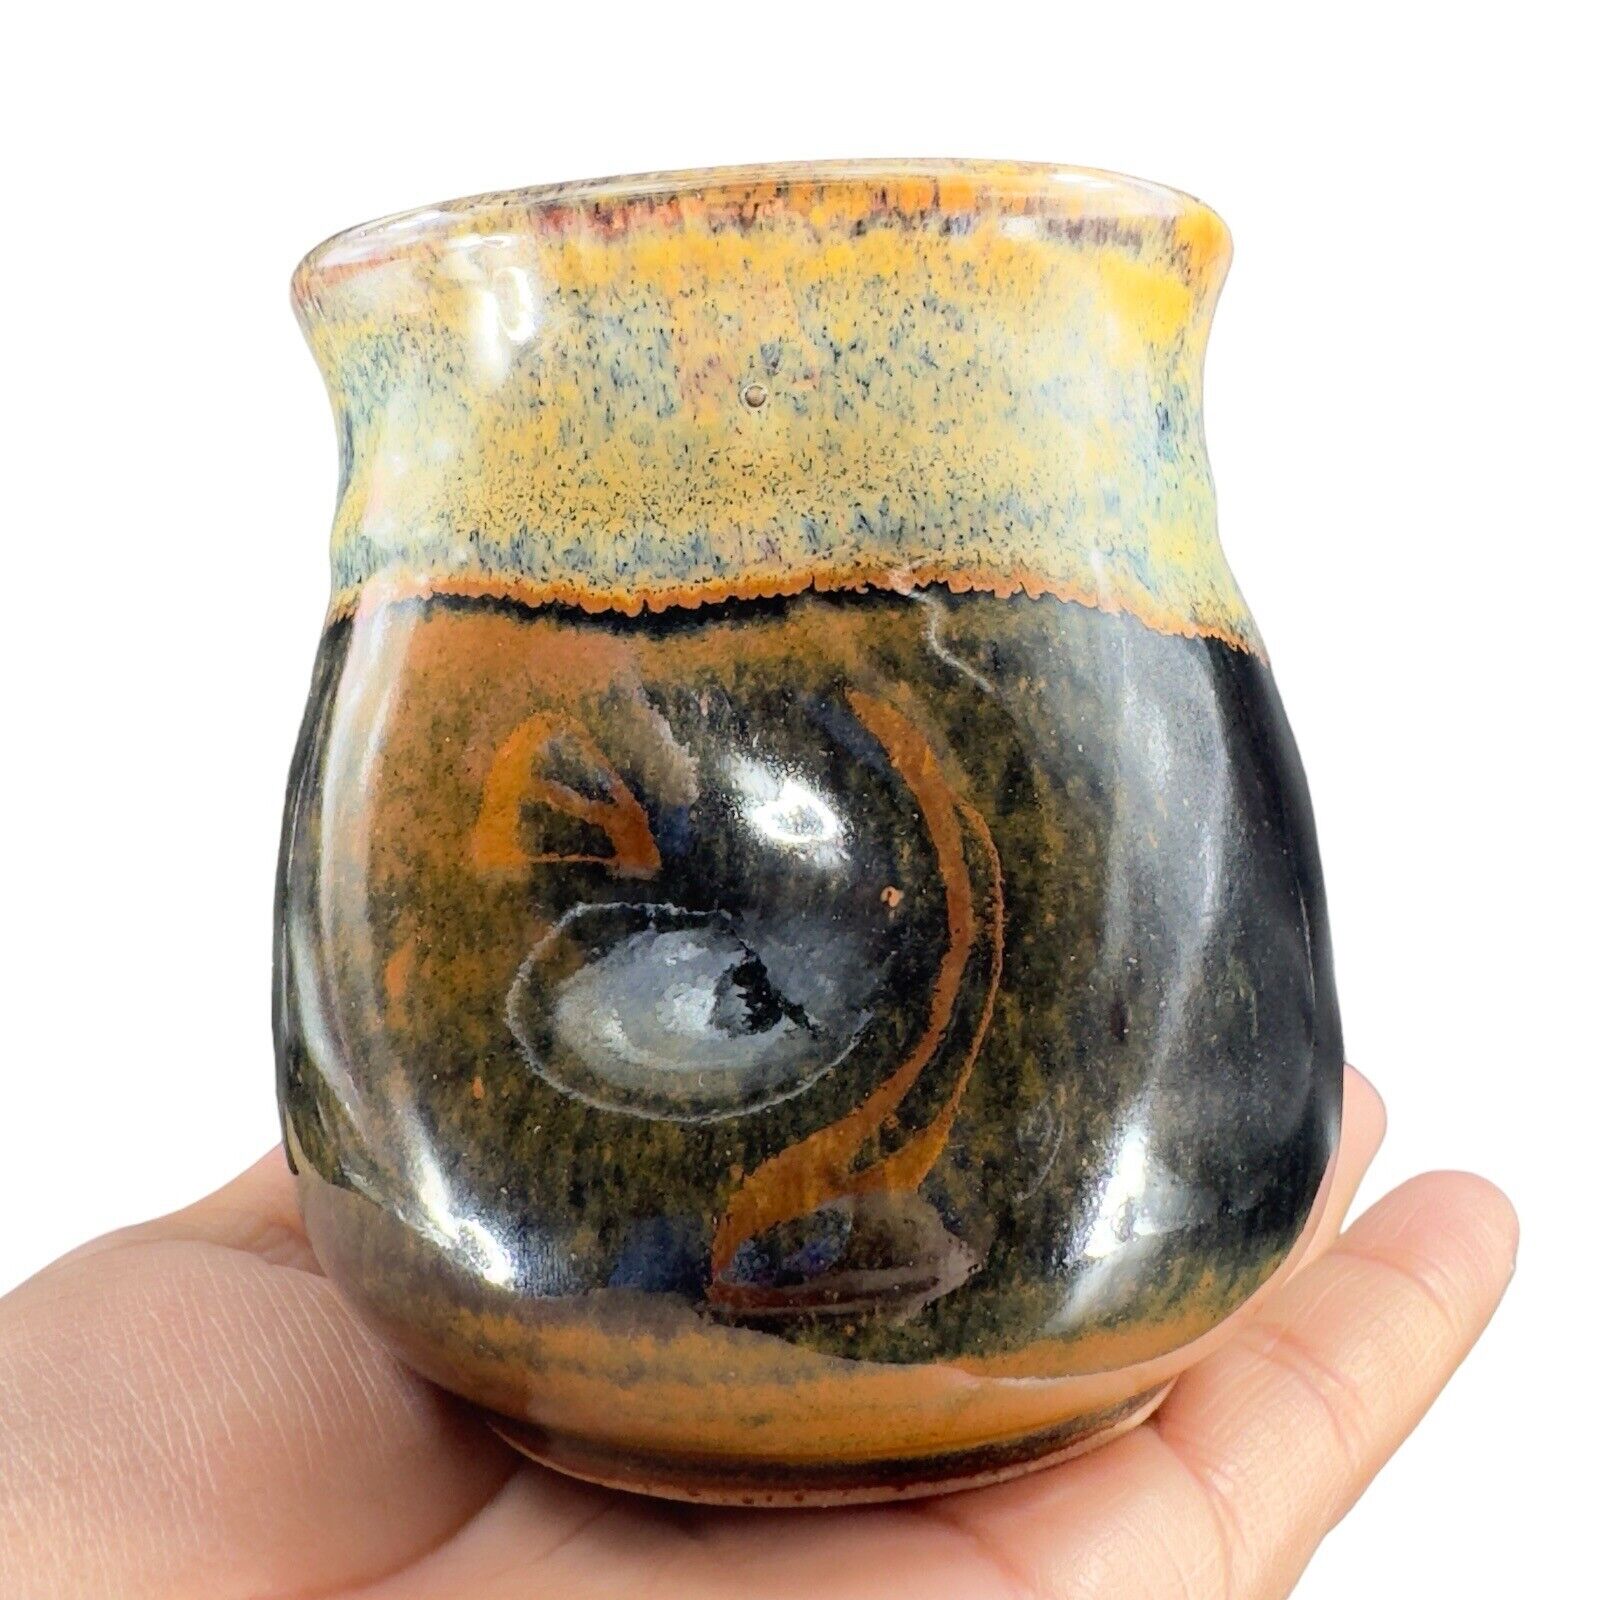 2011 J Luiz Pottery Coffee Mug Handless Mug Drip Glaze Pinched Ceramic Cup Mug